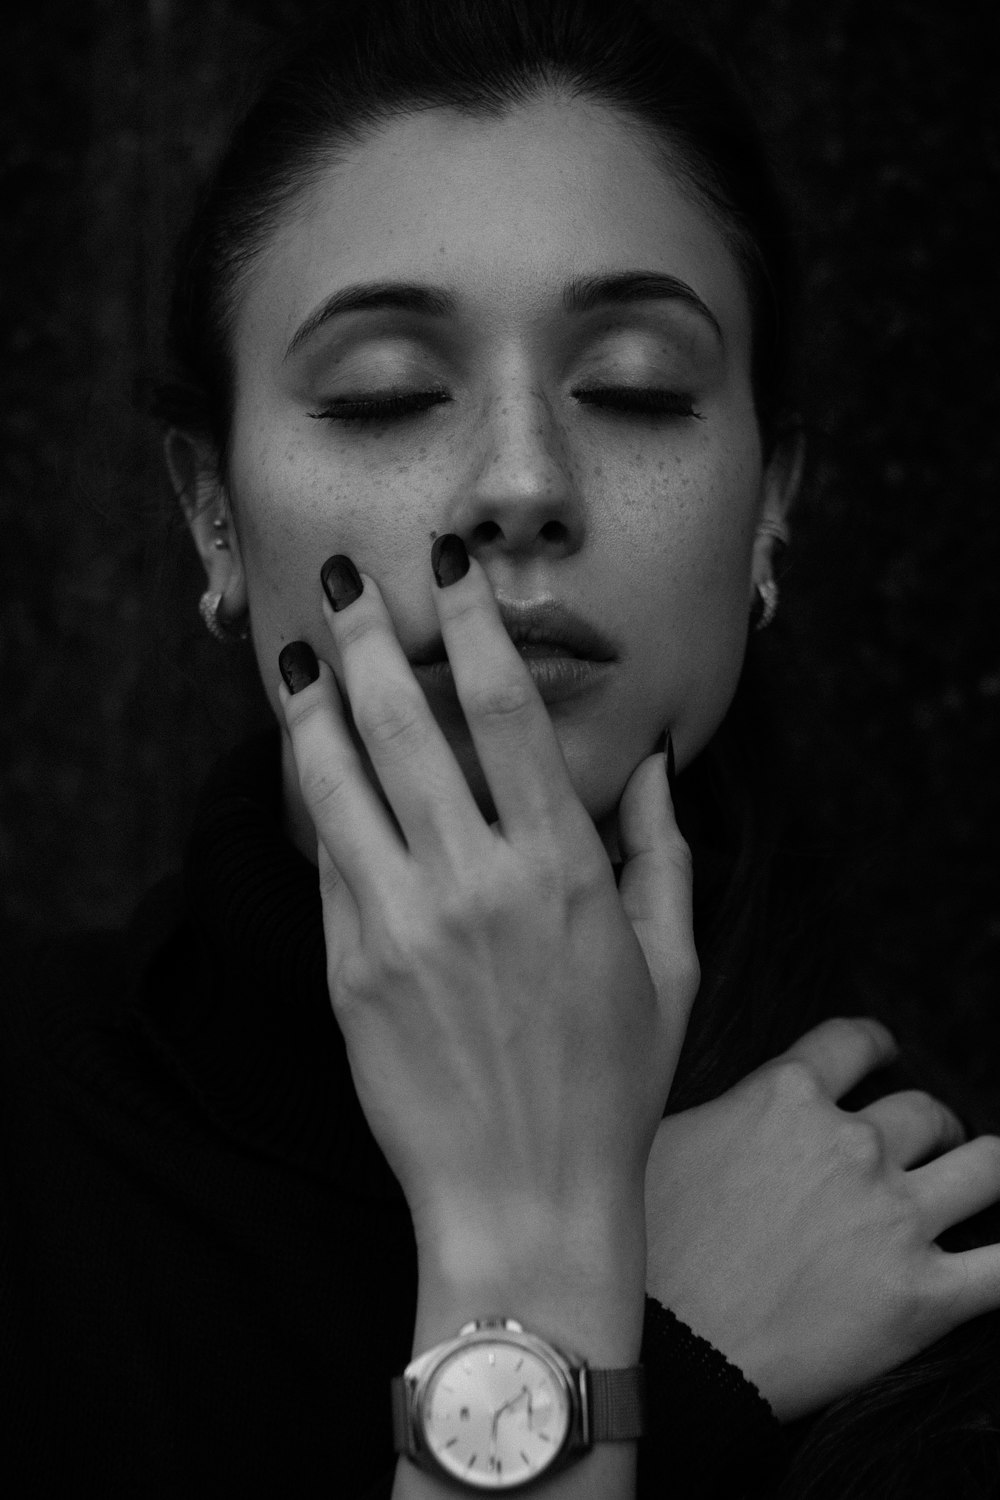 grayscale portrait photo of a woman